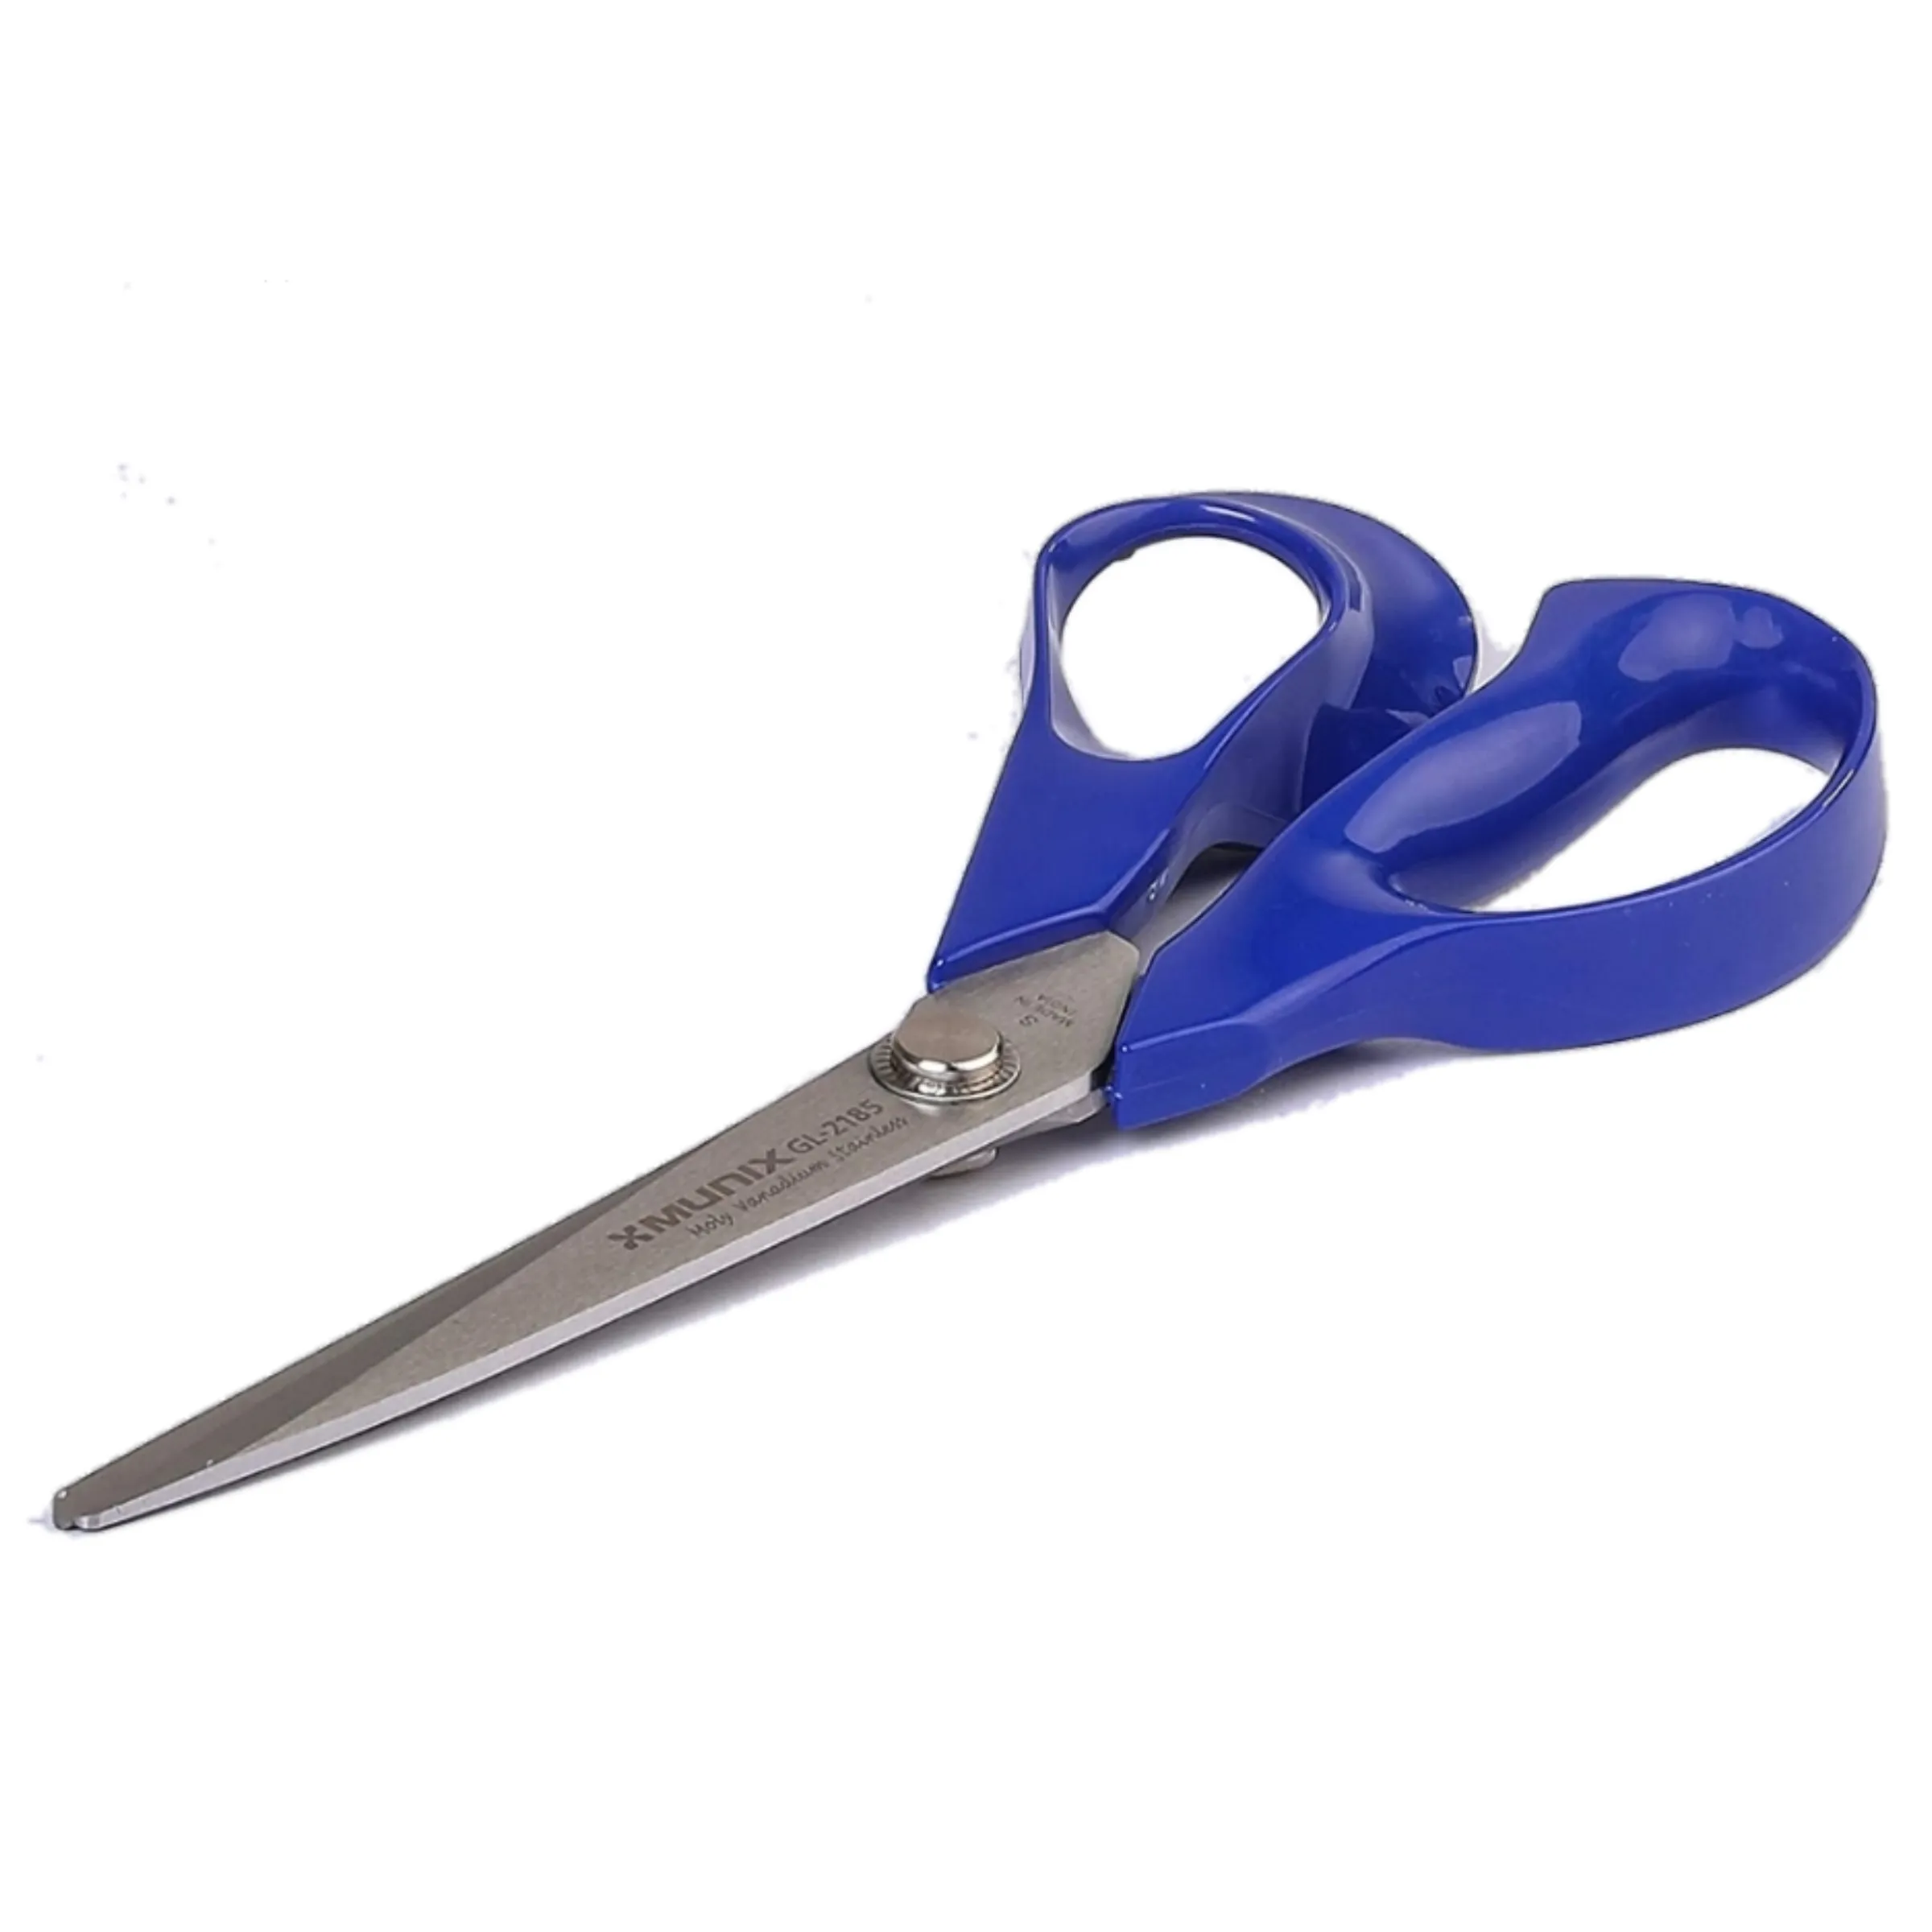 Kangaro Munix Scissors GL-2185  216 mm , ( General, Home & Office ) Pack of 1